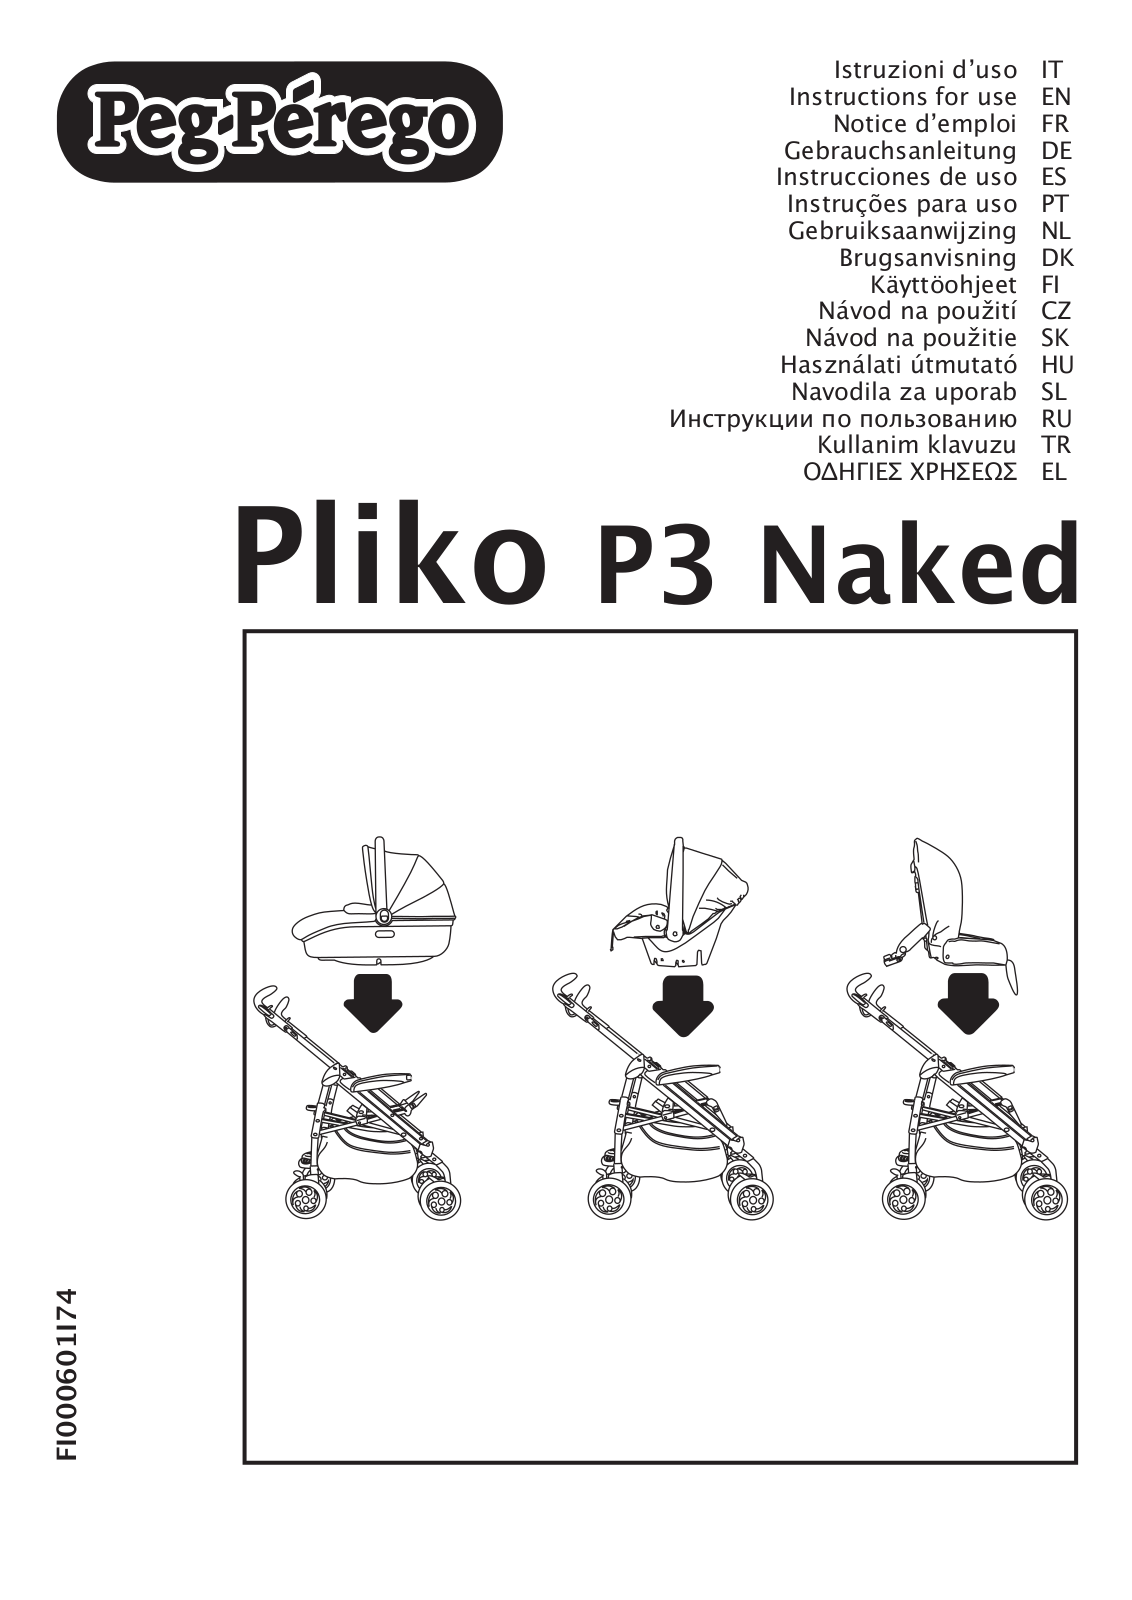 Peg-Perego Pliko P3 Naked User Manual